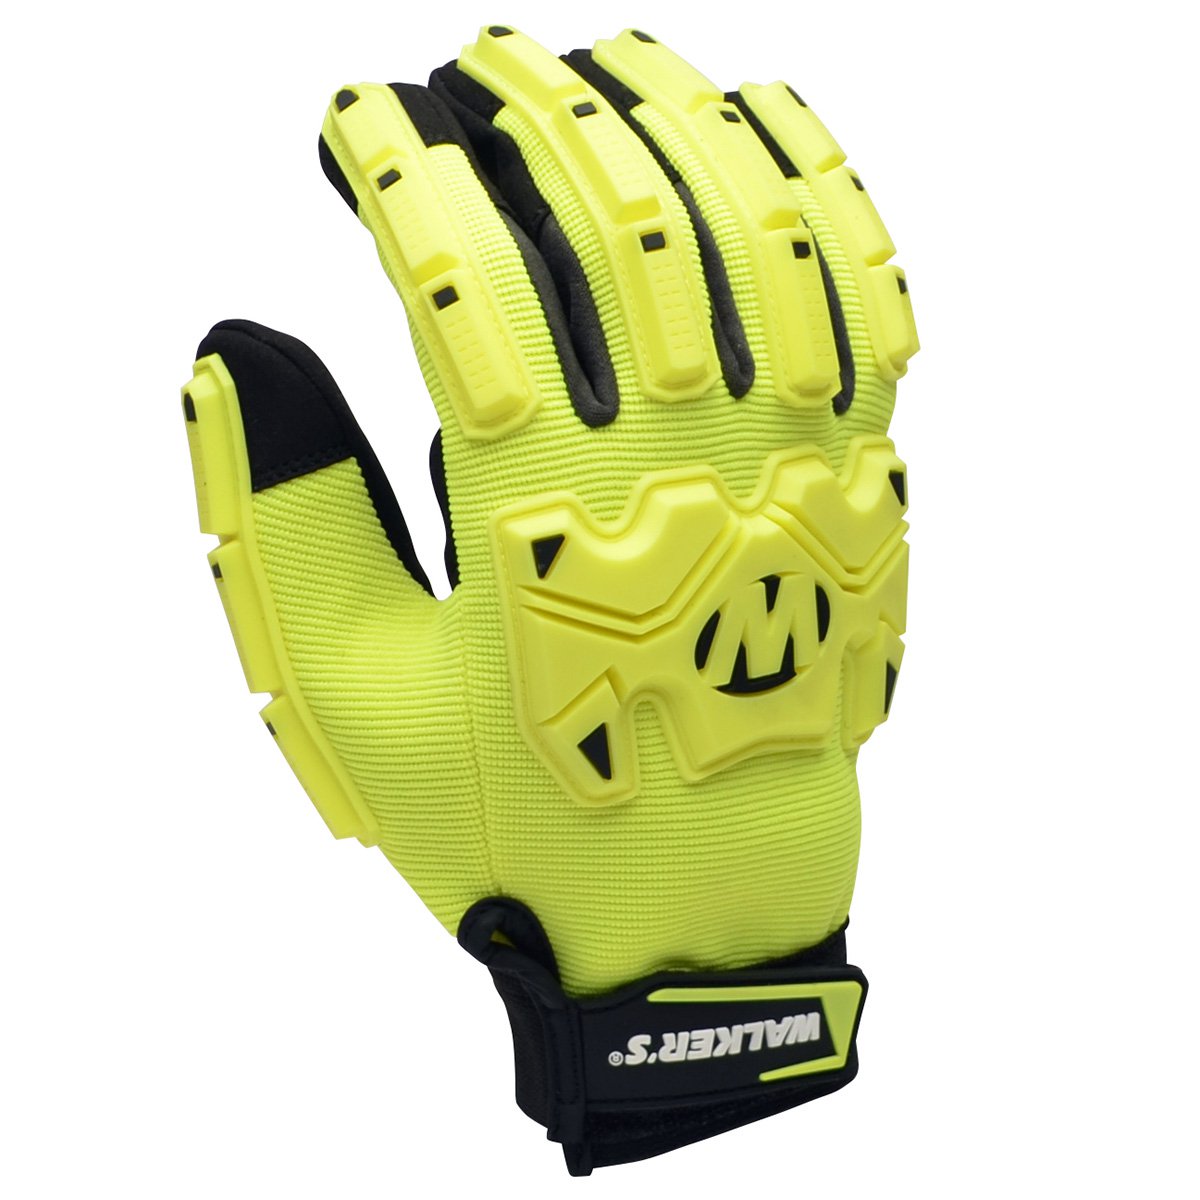 A3 Cut Resistant XTRA Grip Gloves - Walker's